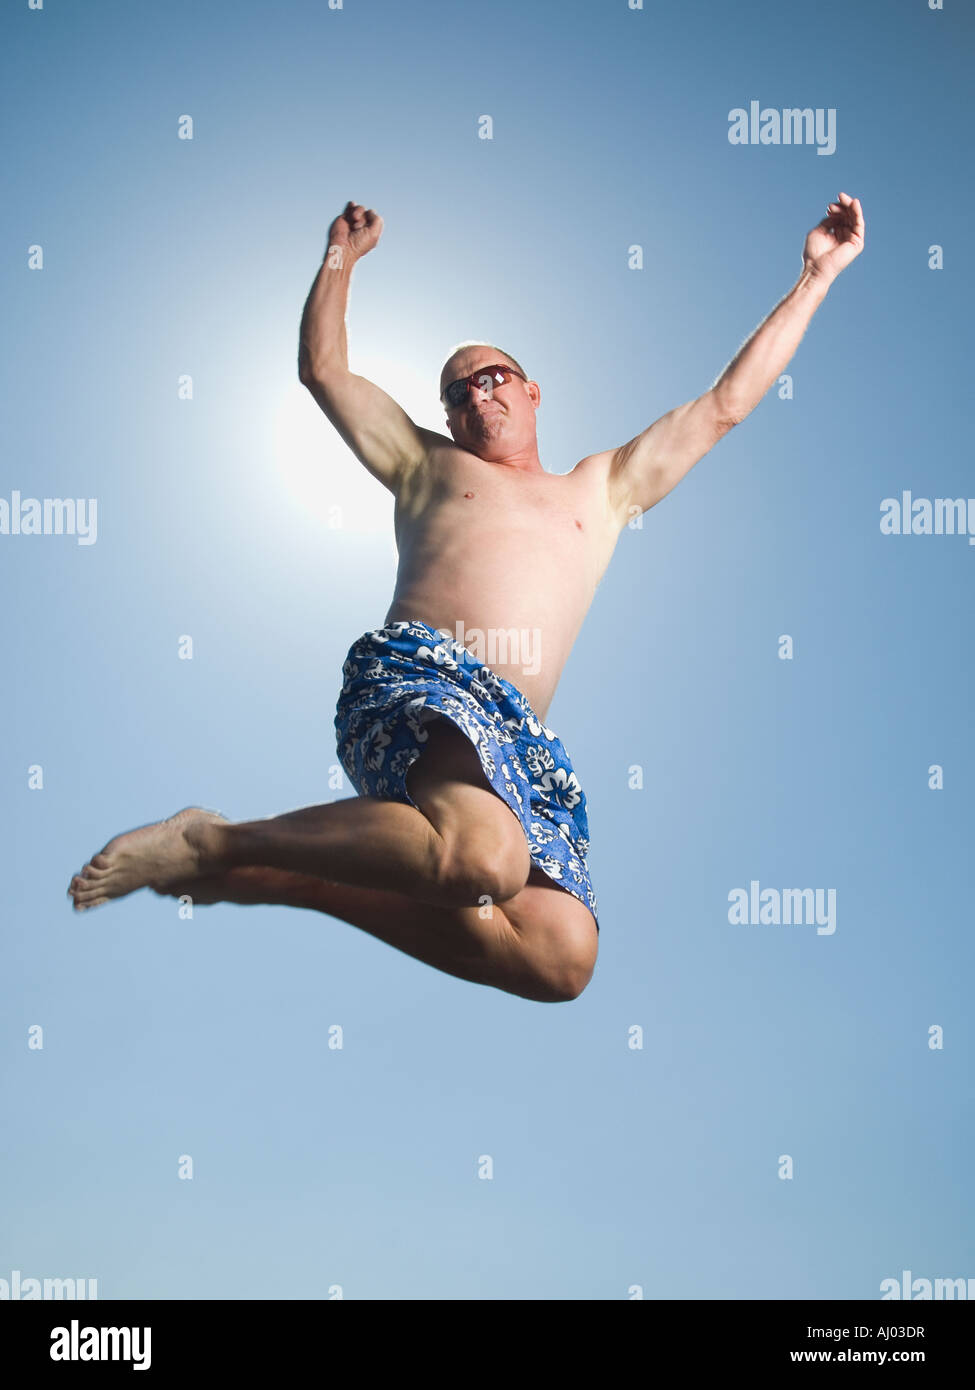 Uomo in costume da bagno jumping Foto Stock